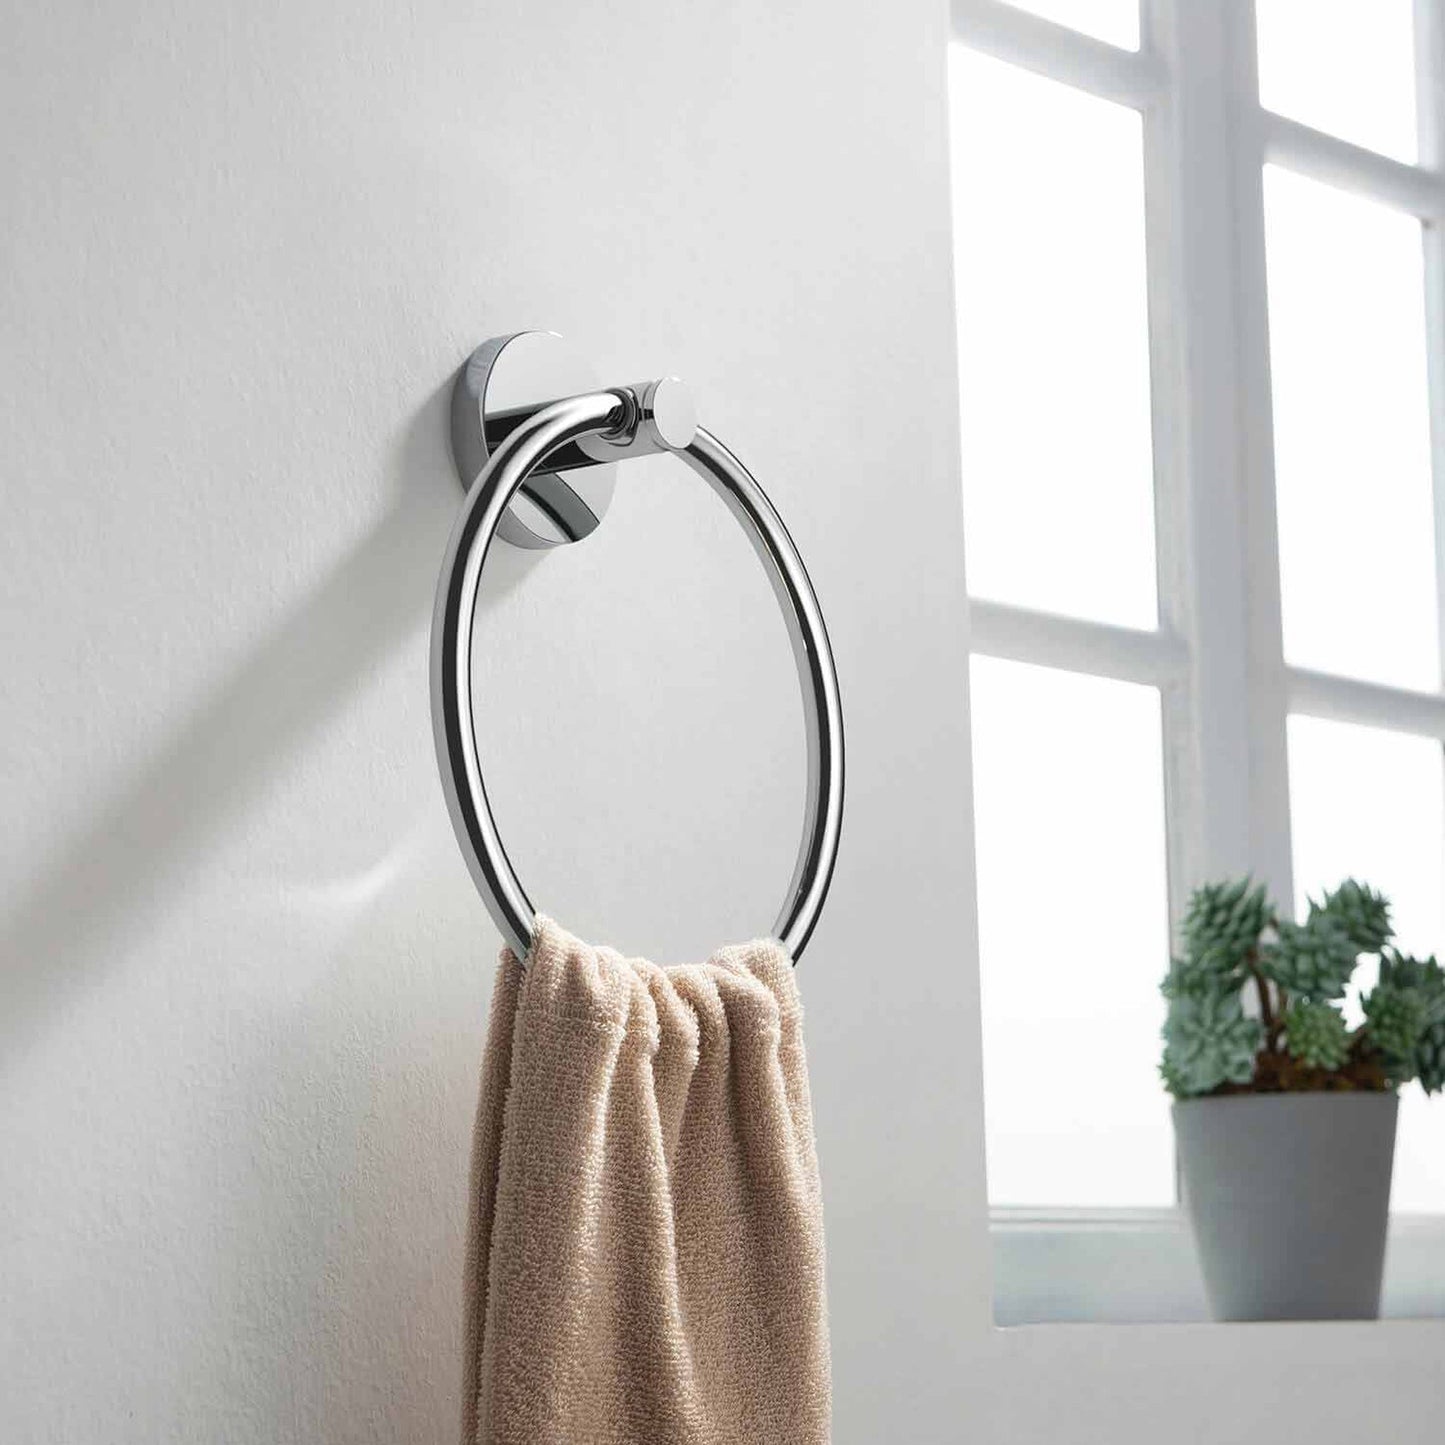 KIBI Circular Brass Bathroom Towel Ring in Chrome Finish